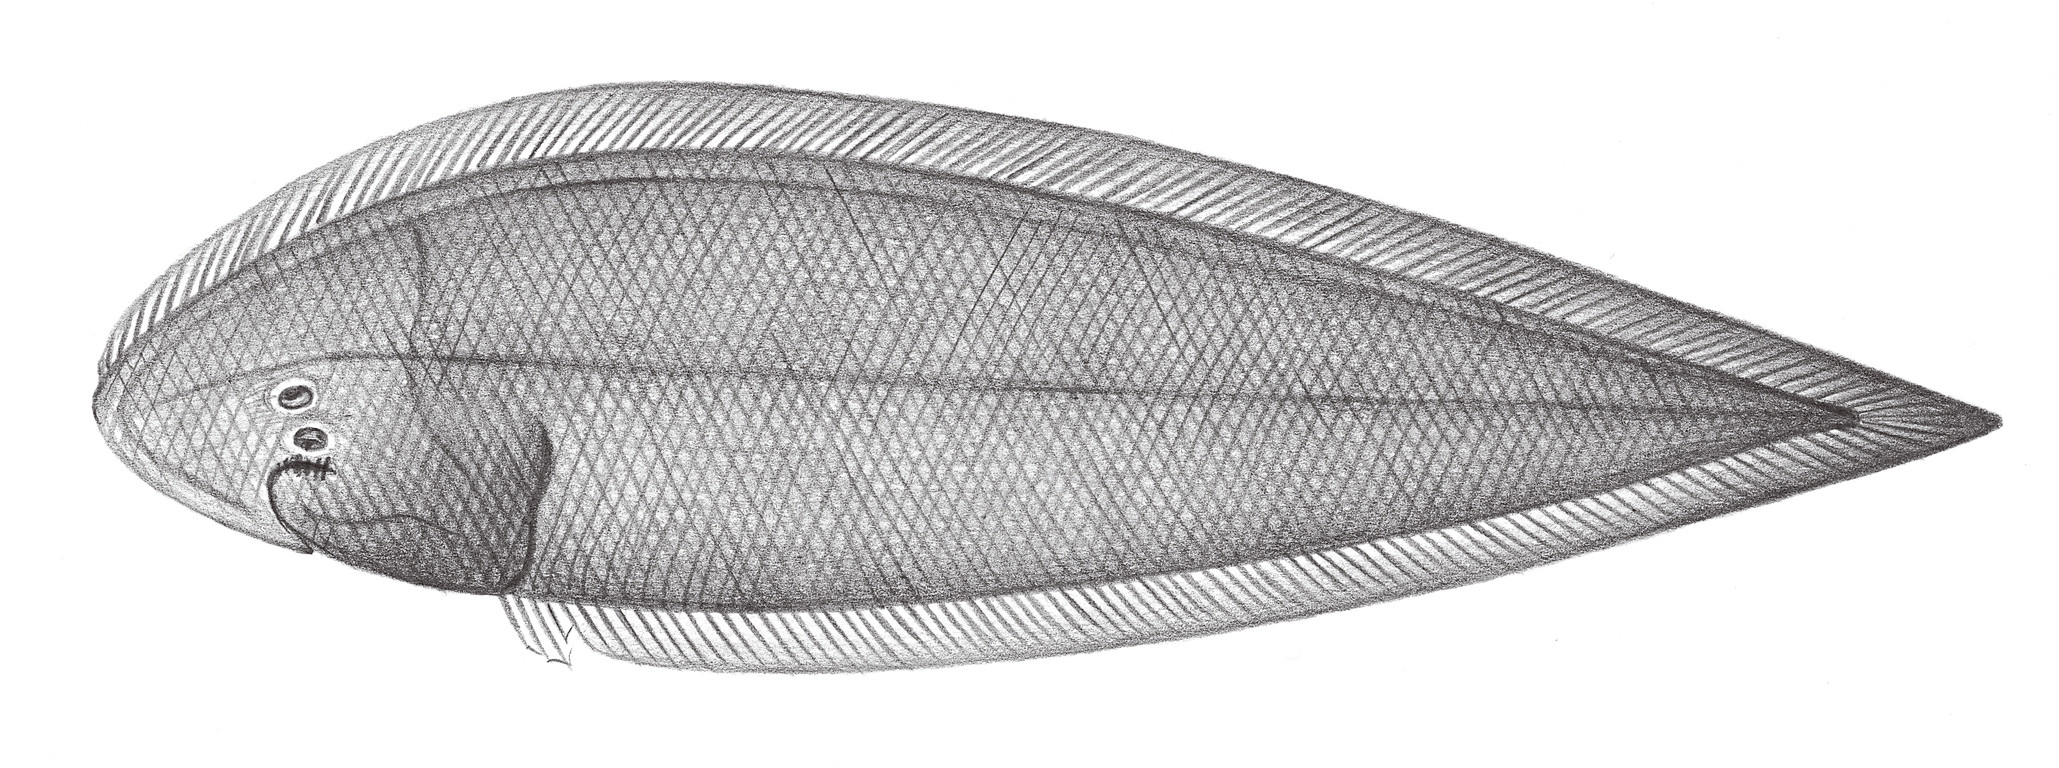 2466.布氏鬚鰨 Paraplagusia blochi (Bleeker, 1851)